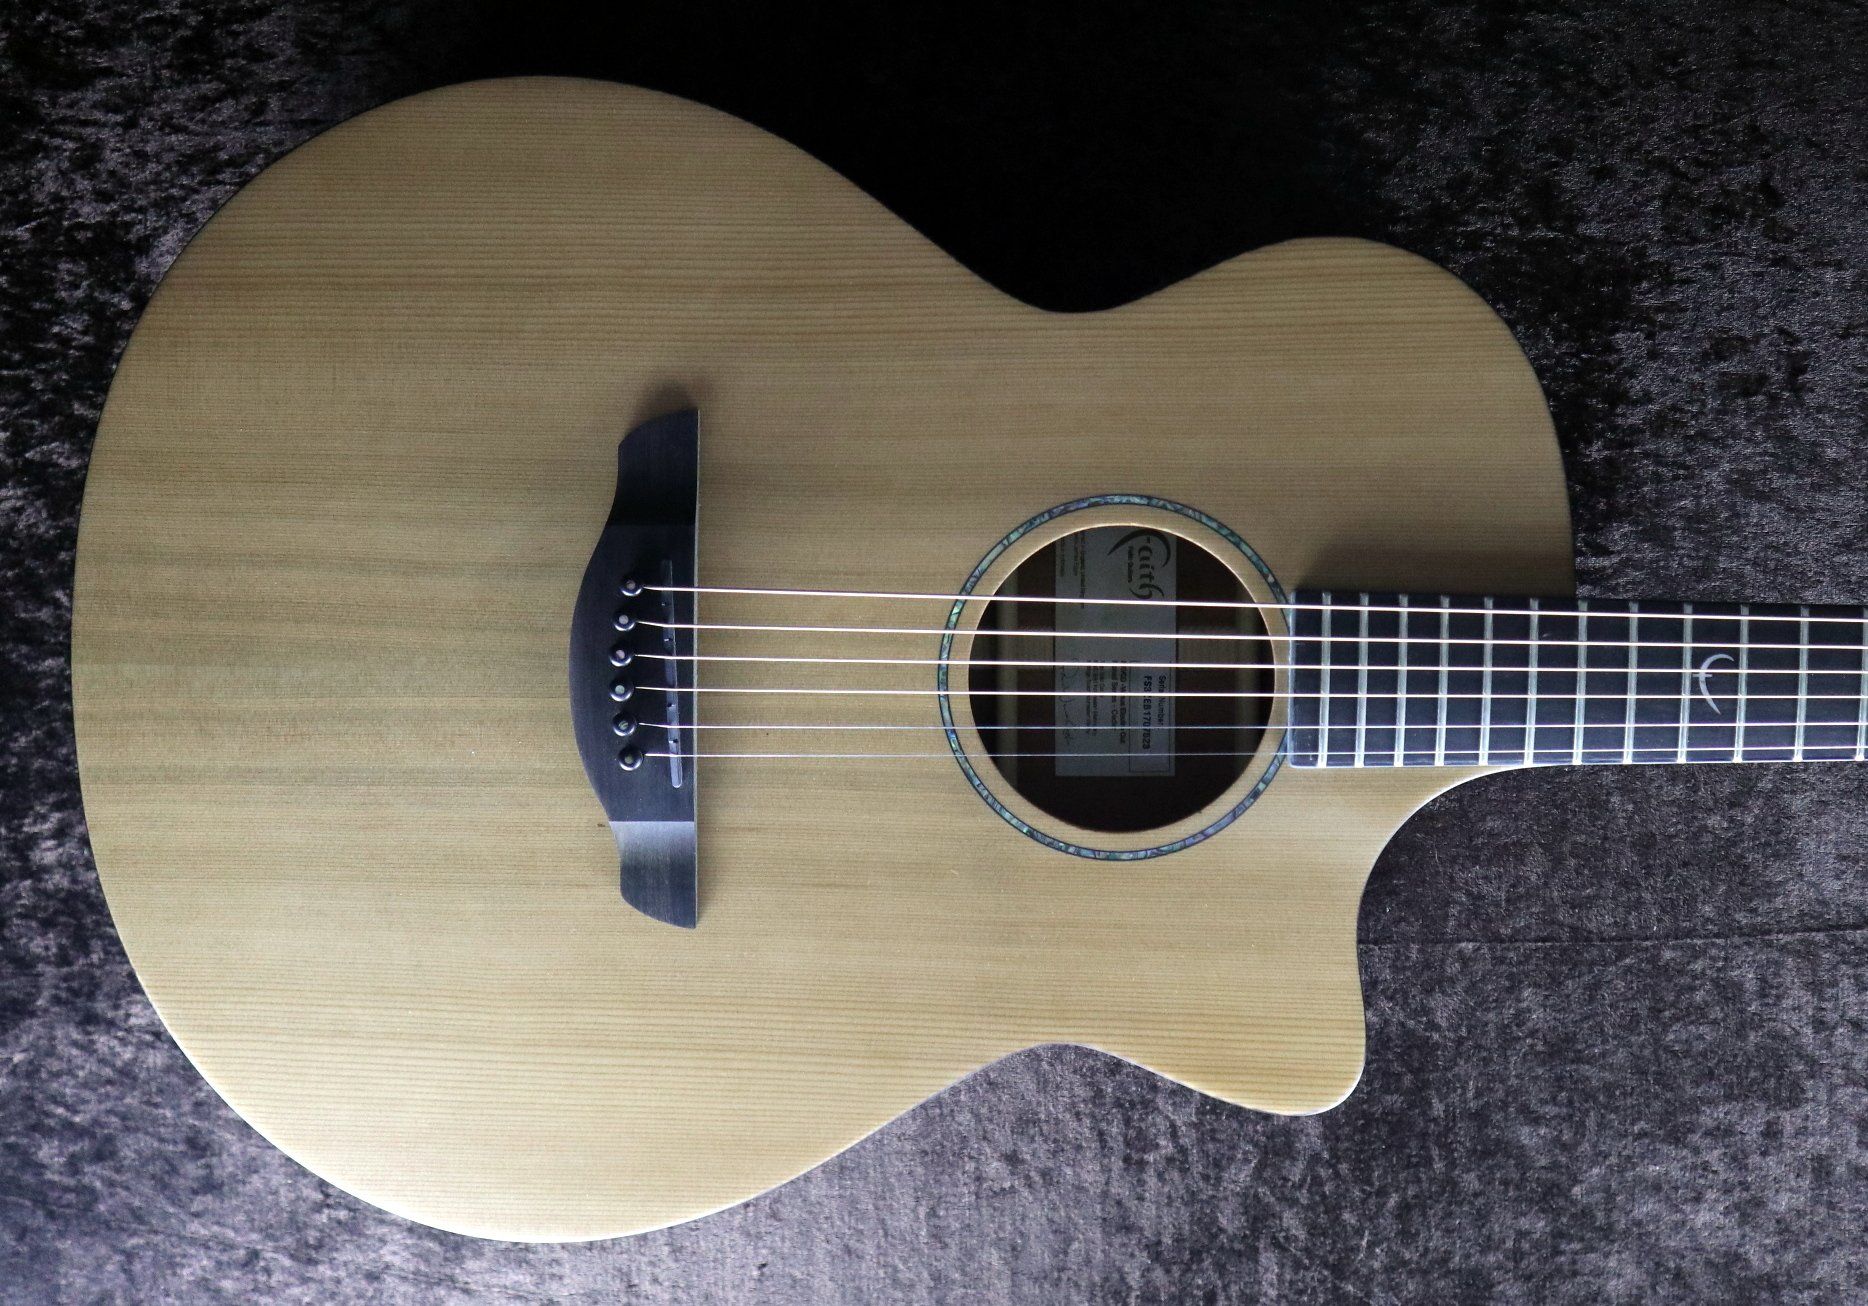 Faith FKVCD Electro Acoustic Guitar ( Venus) Inc Gig Bag, Electro Acoustic Guitar for sale at Richards Guitars.